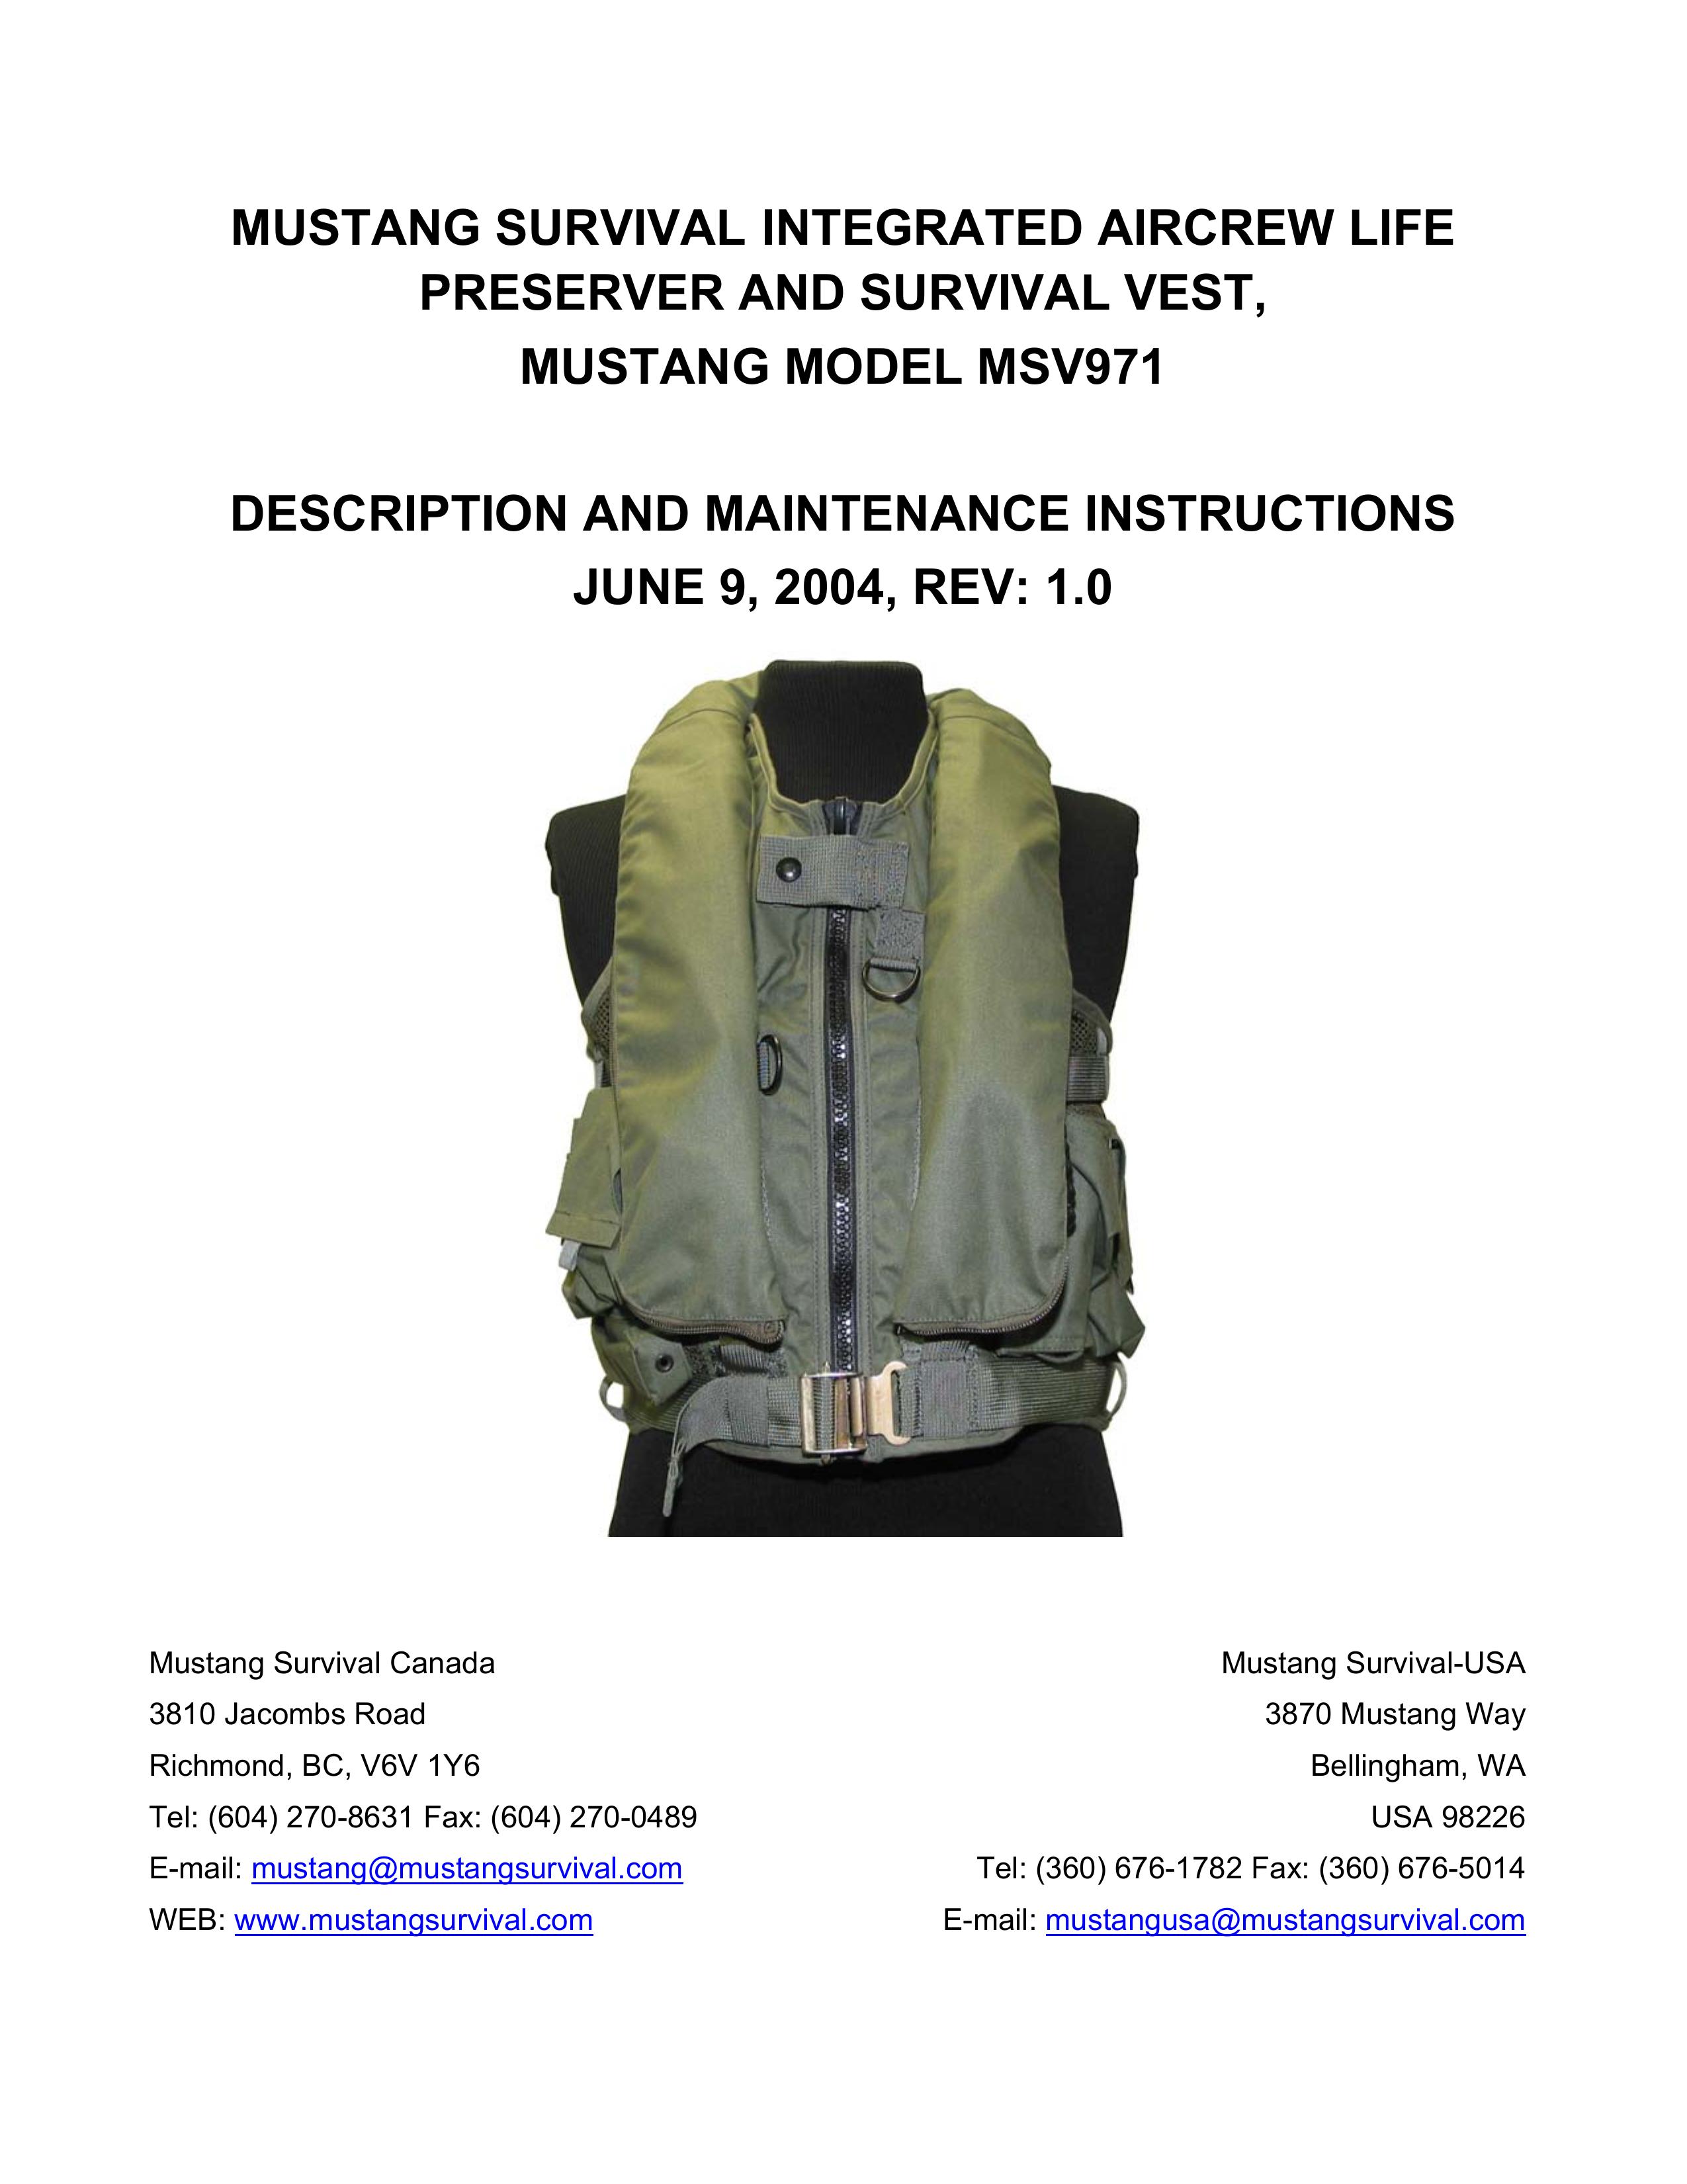 Mustang Survival MSV971 Life Jacket User Manual